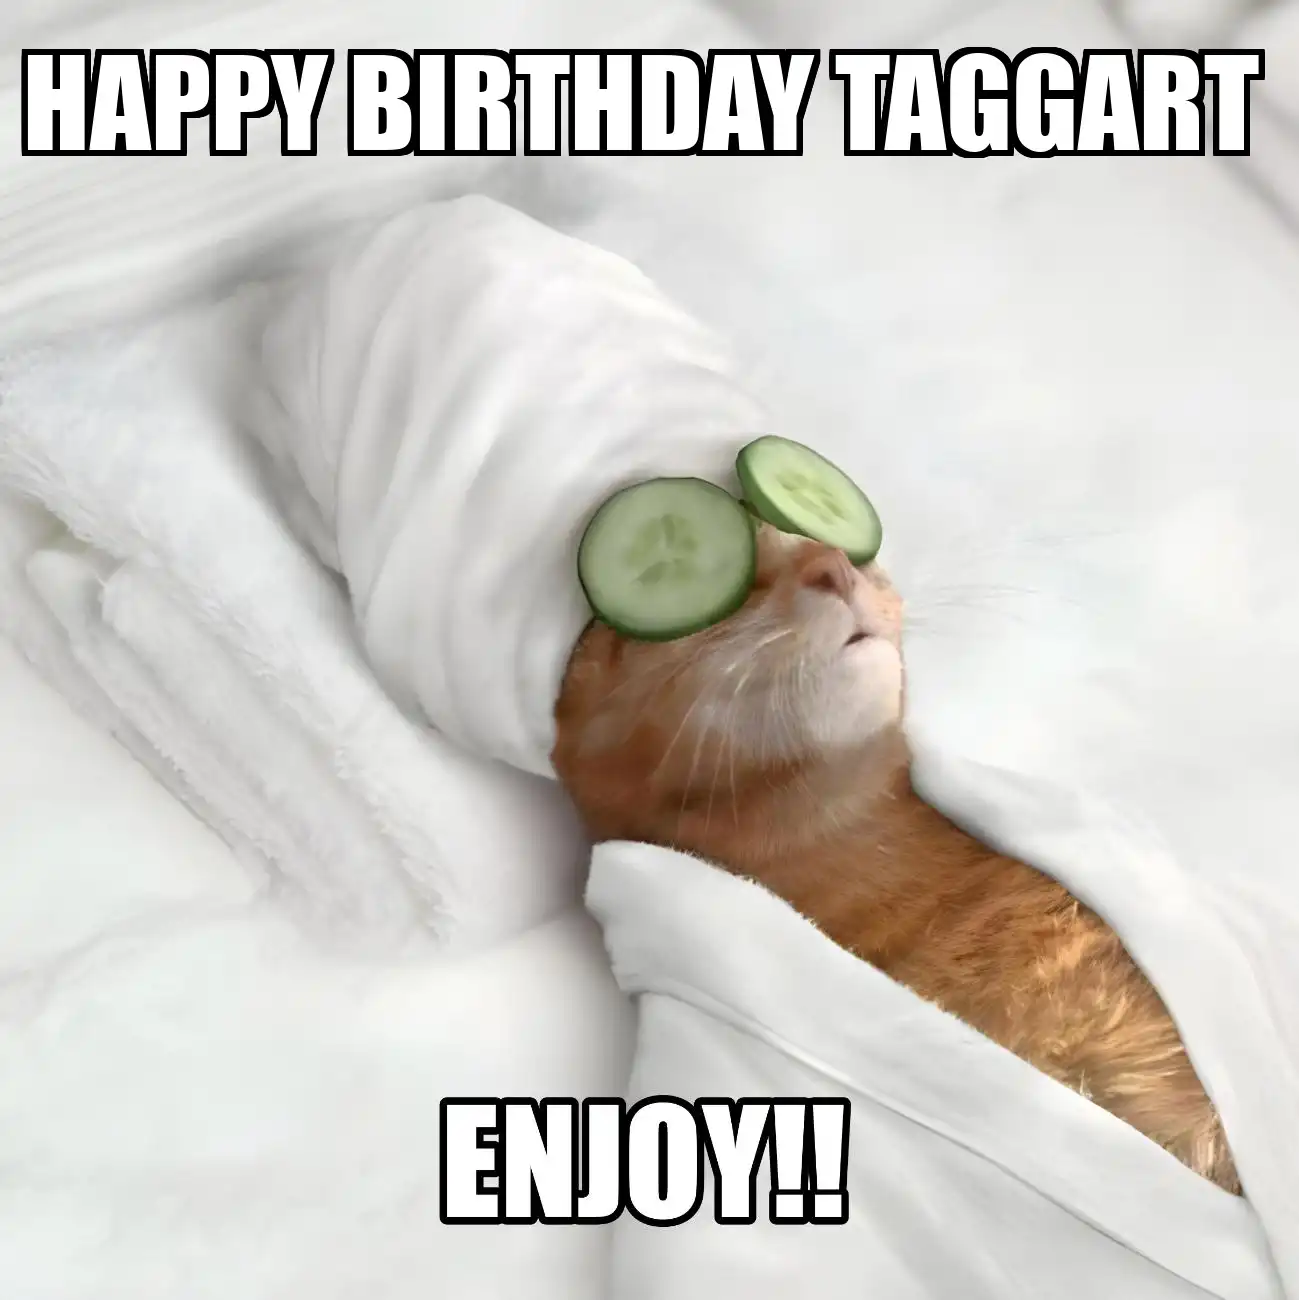 Happy Birthday Taggart Enjoy Cat Meme